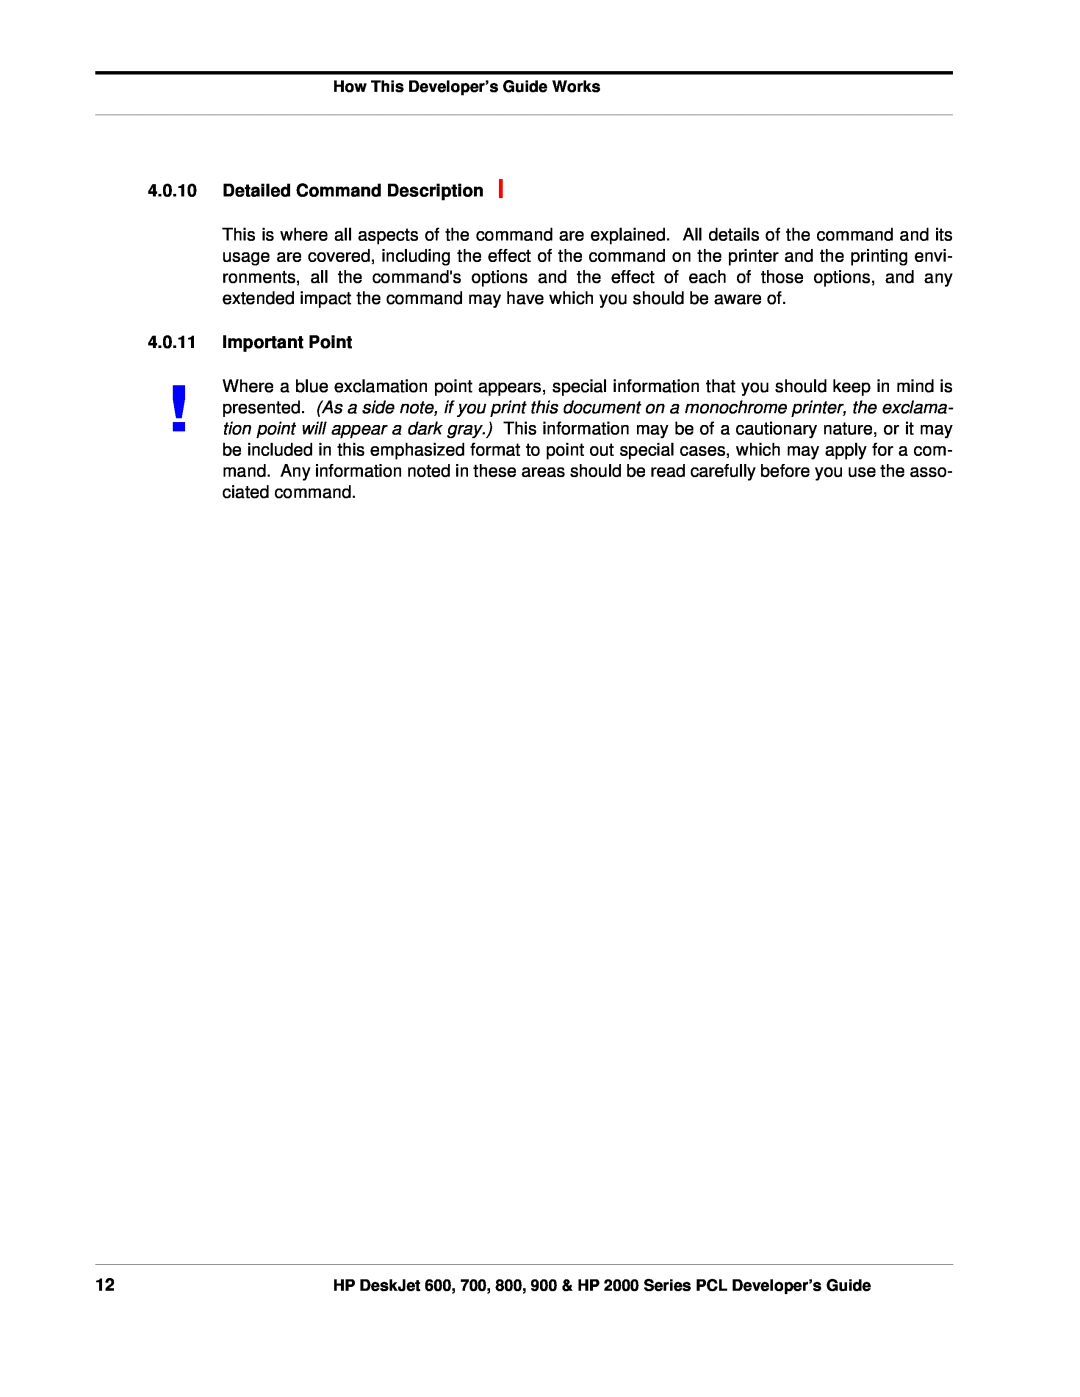 HP 800, 700 manual Detailed Command Description, Important Point 